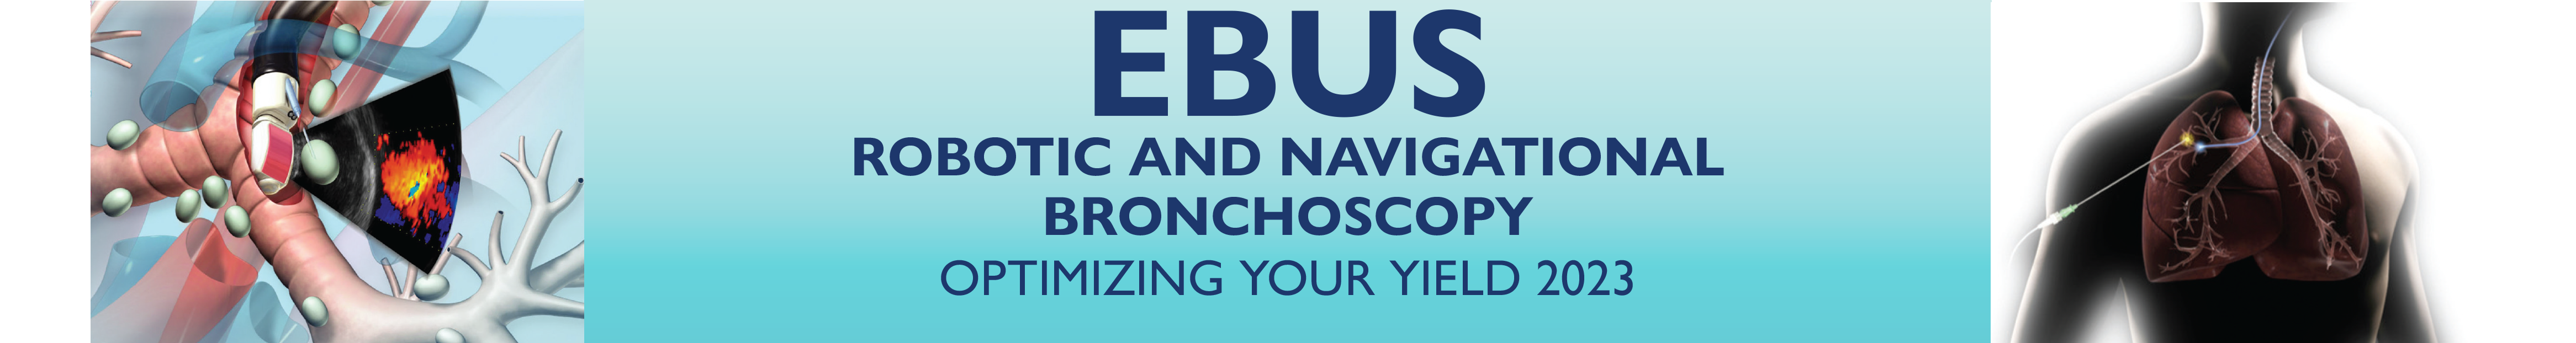 EBUS Robotic and Navigational Bronchoscopy: Optimizing Your Yield 2023 Banner